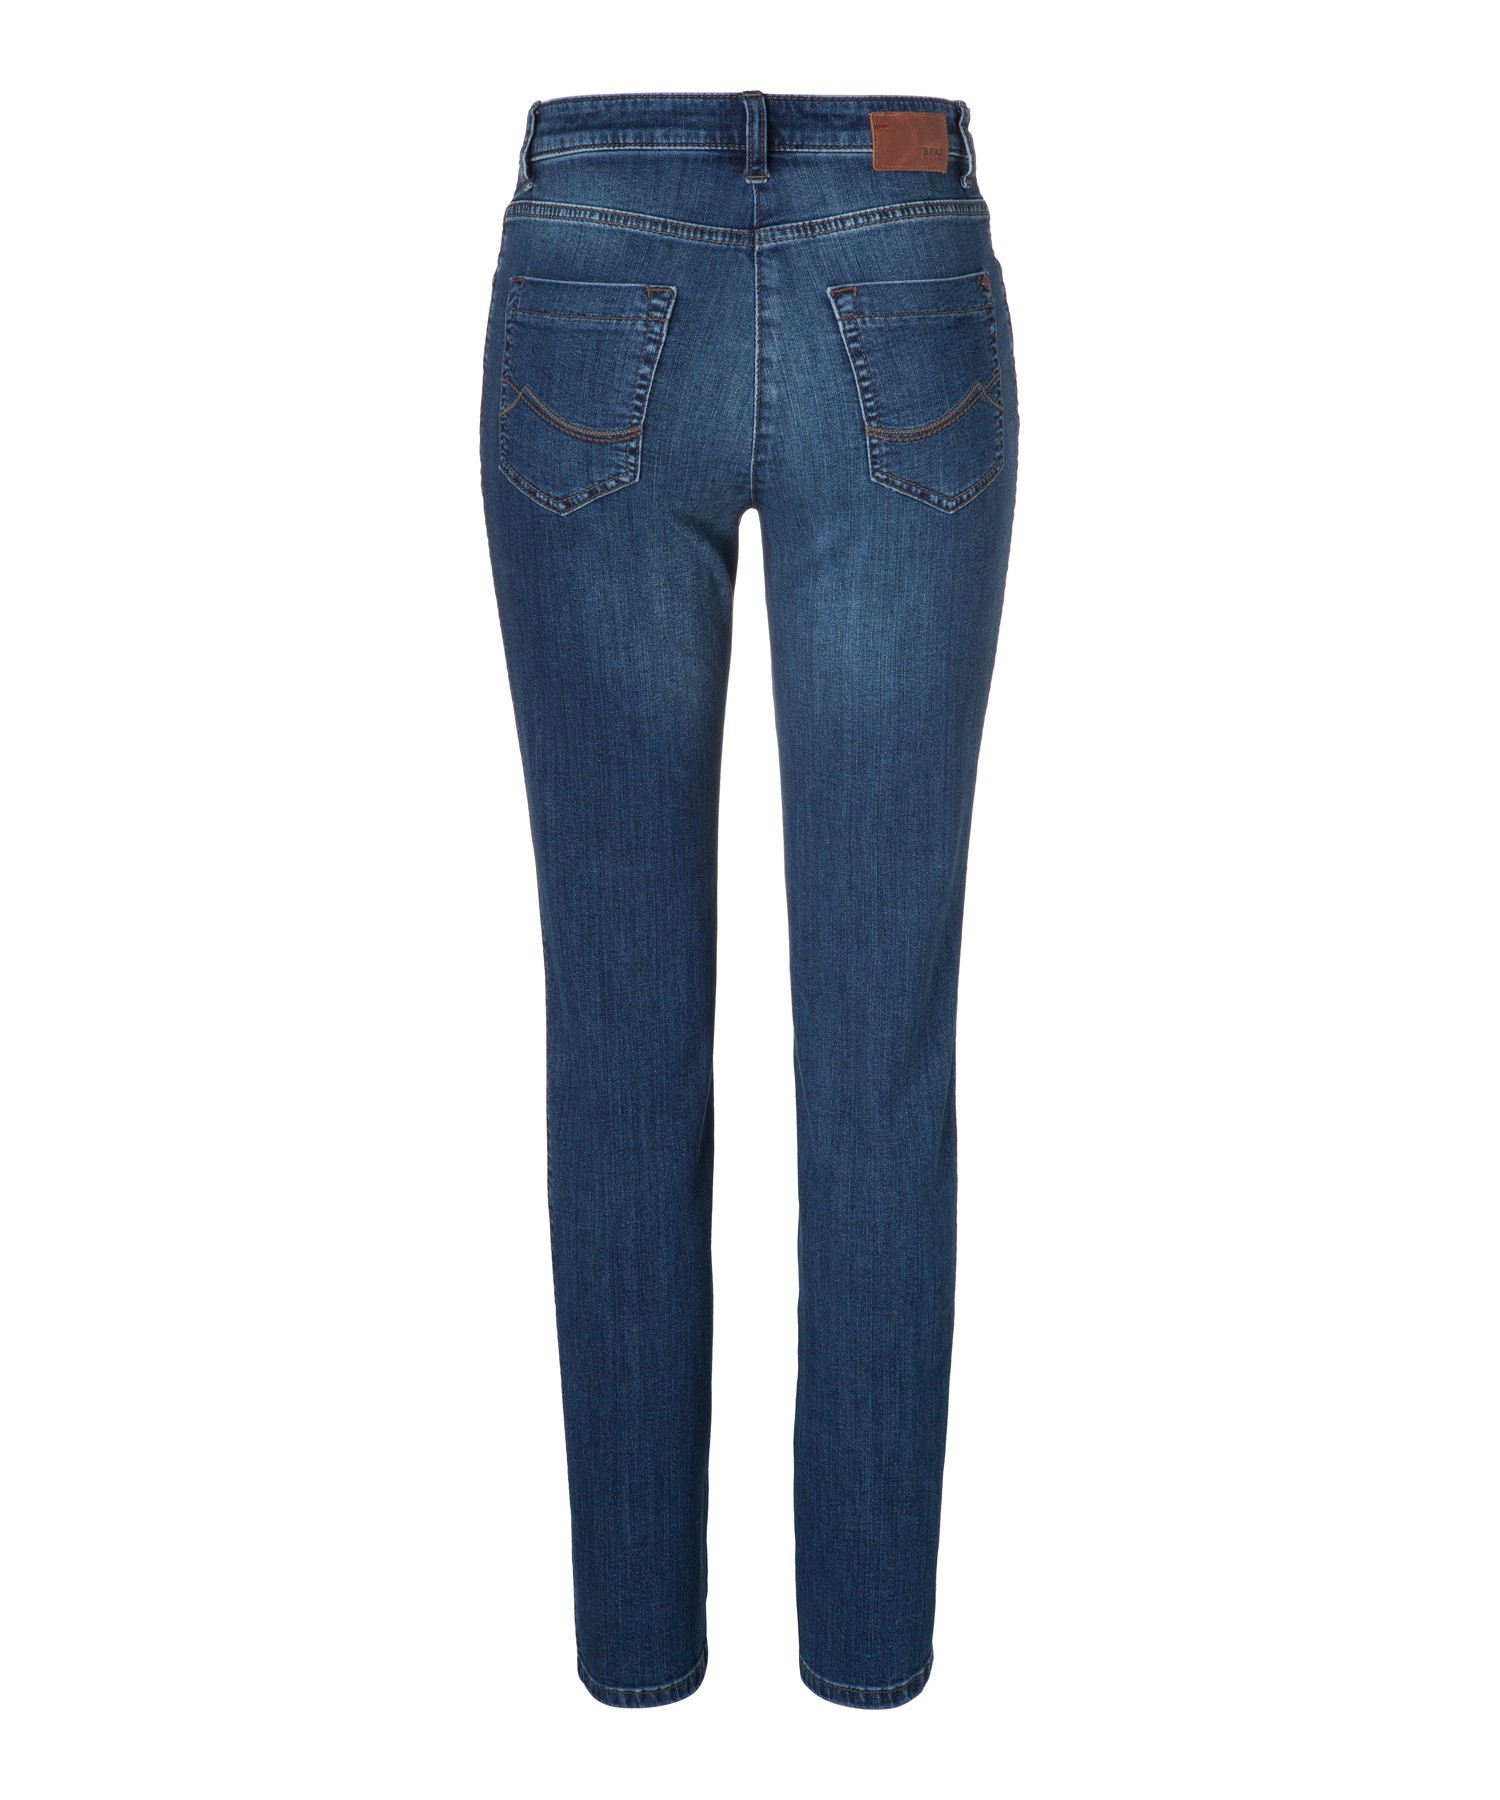 Brax Mary Rose Jeans Slim Straight Regular Blue in Brax Clothing Range